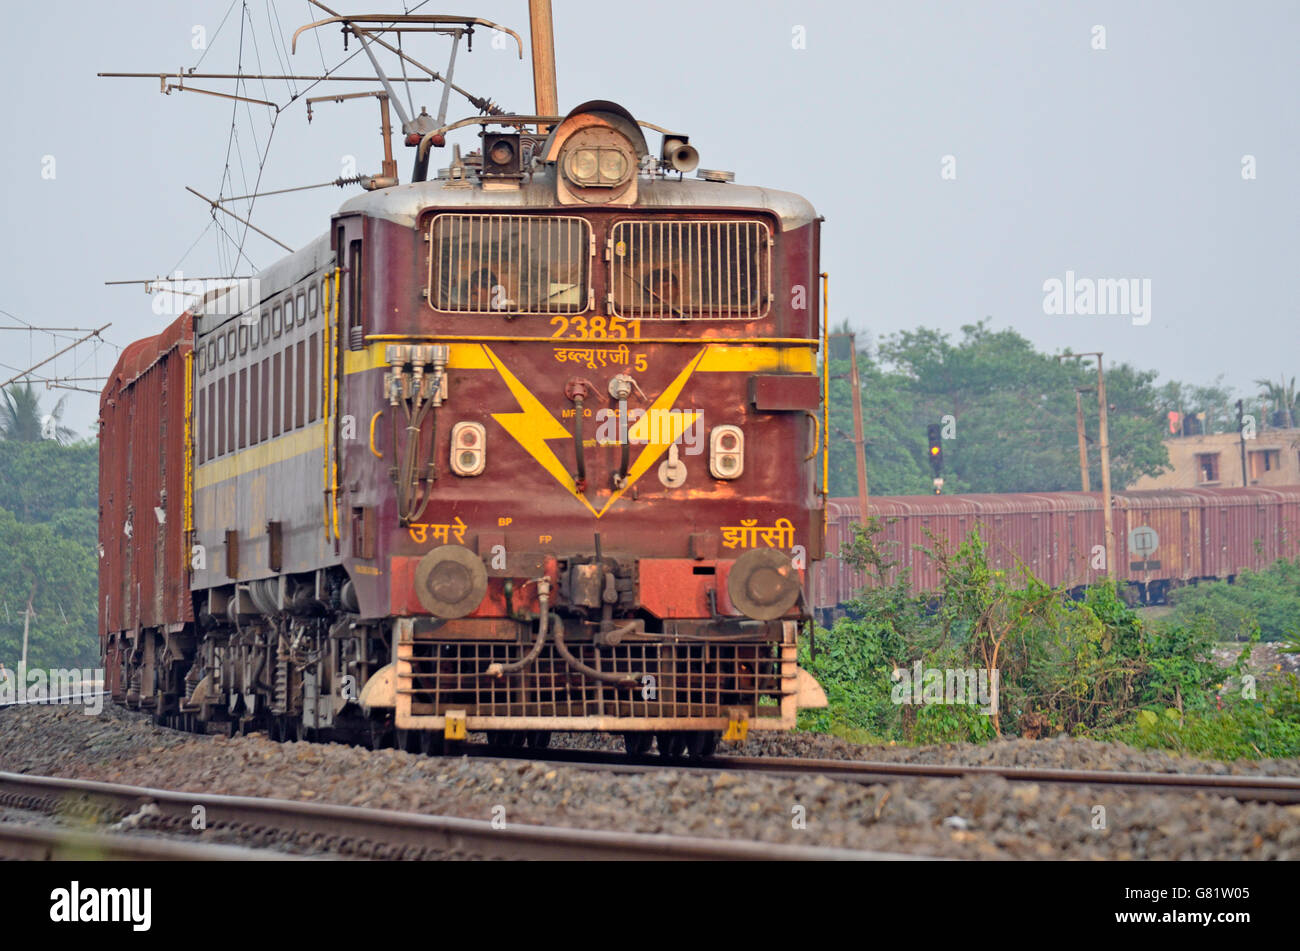 Goods train, Indian Railways Stock Photo